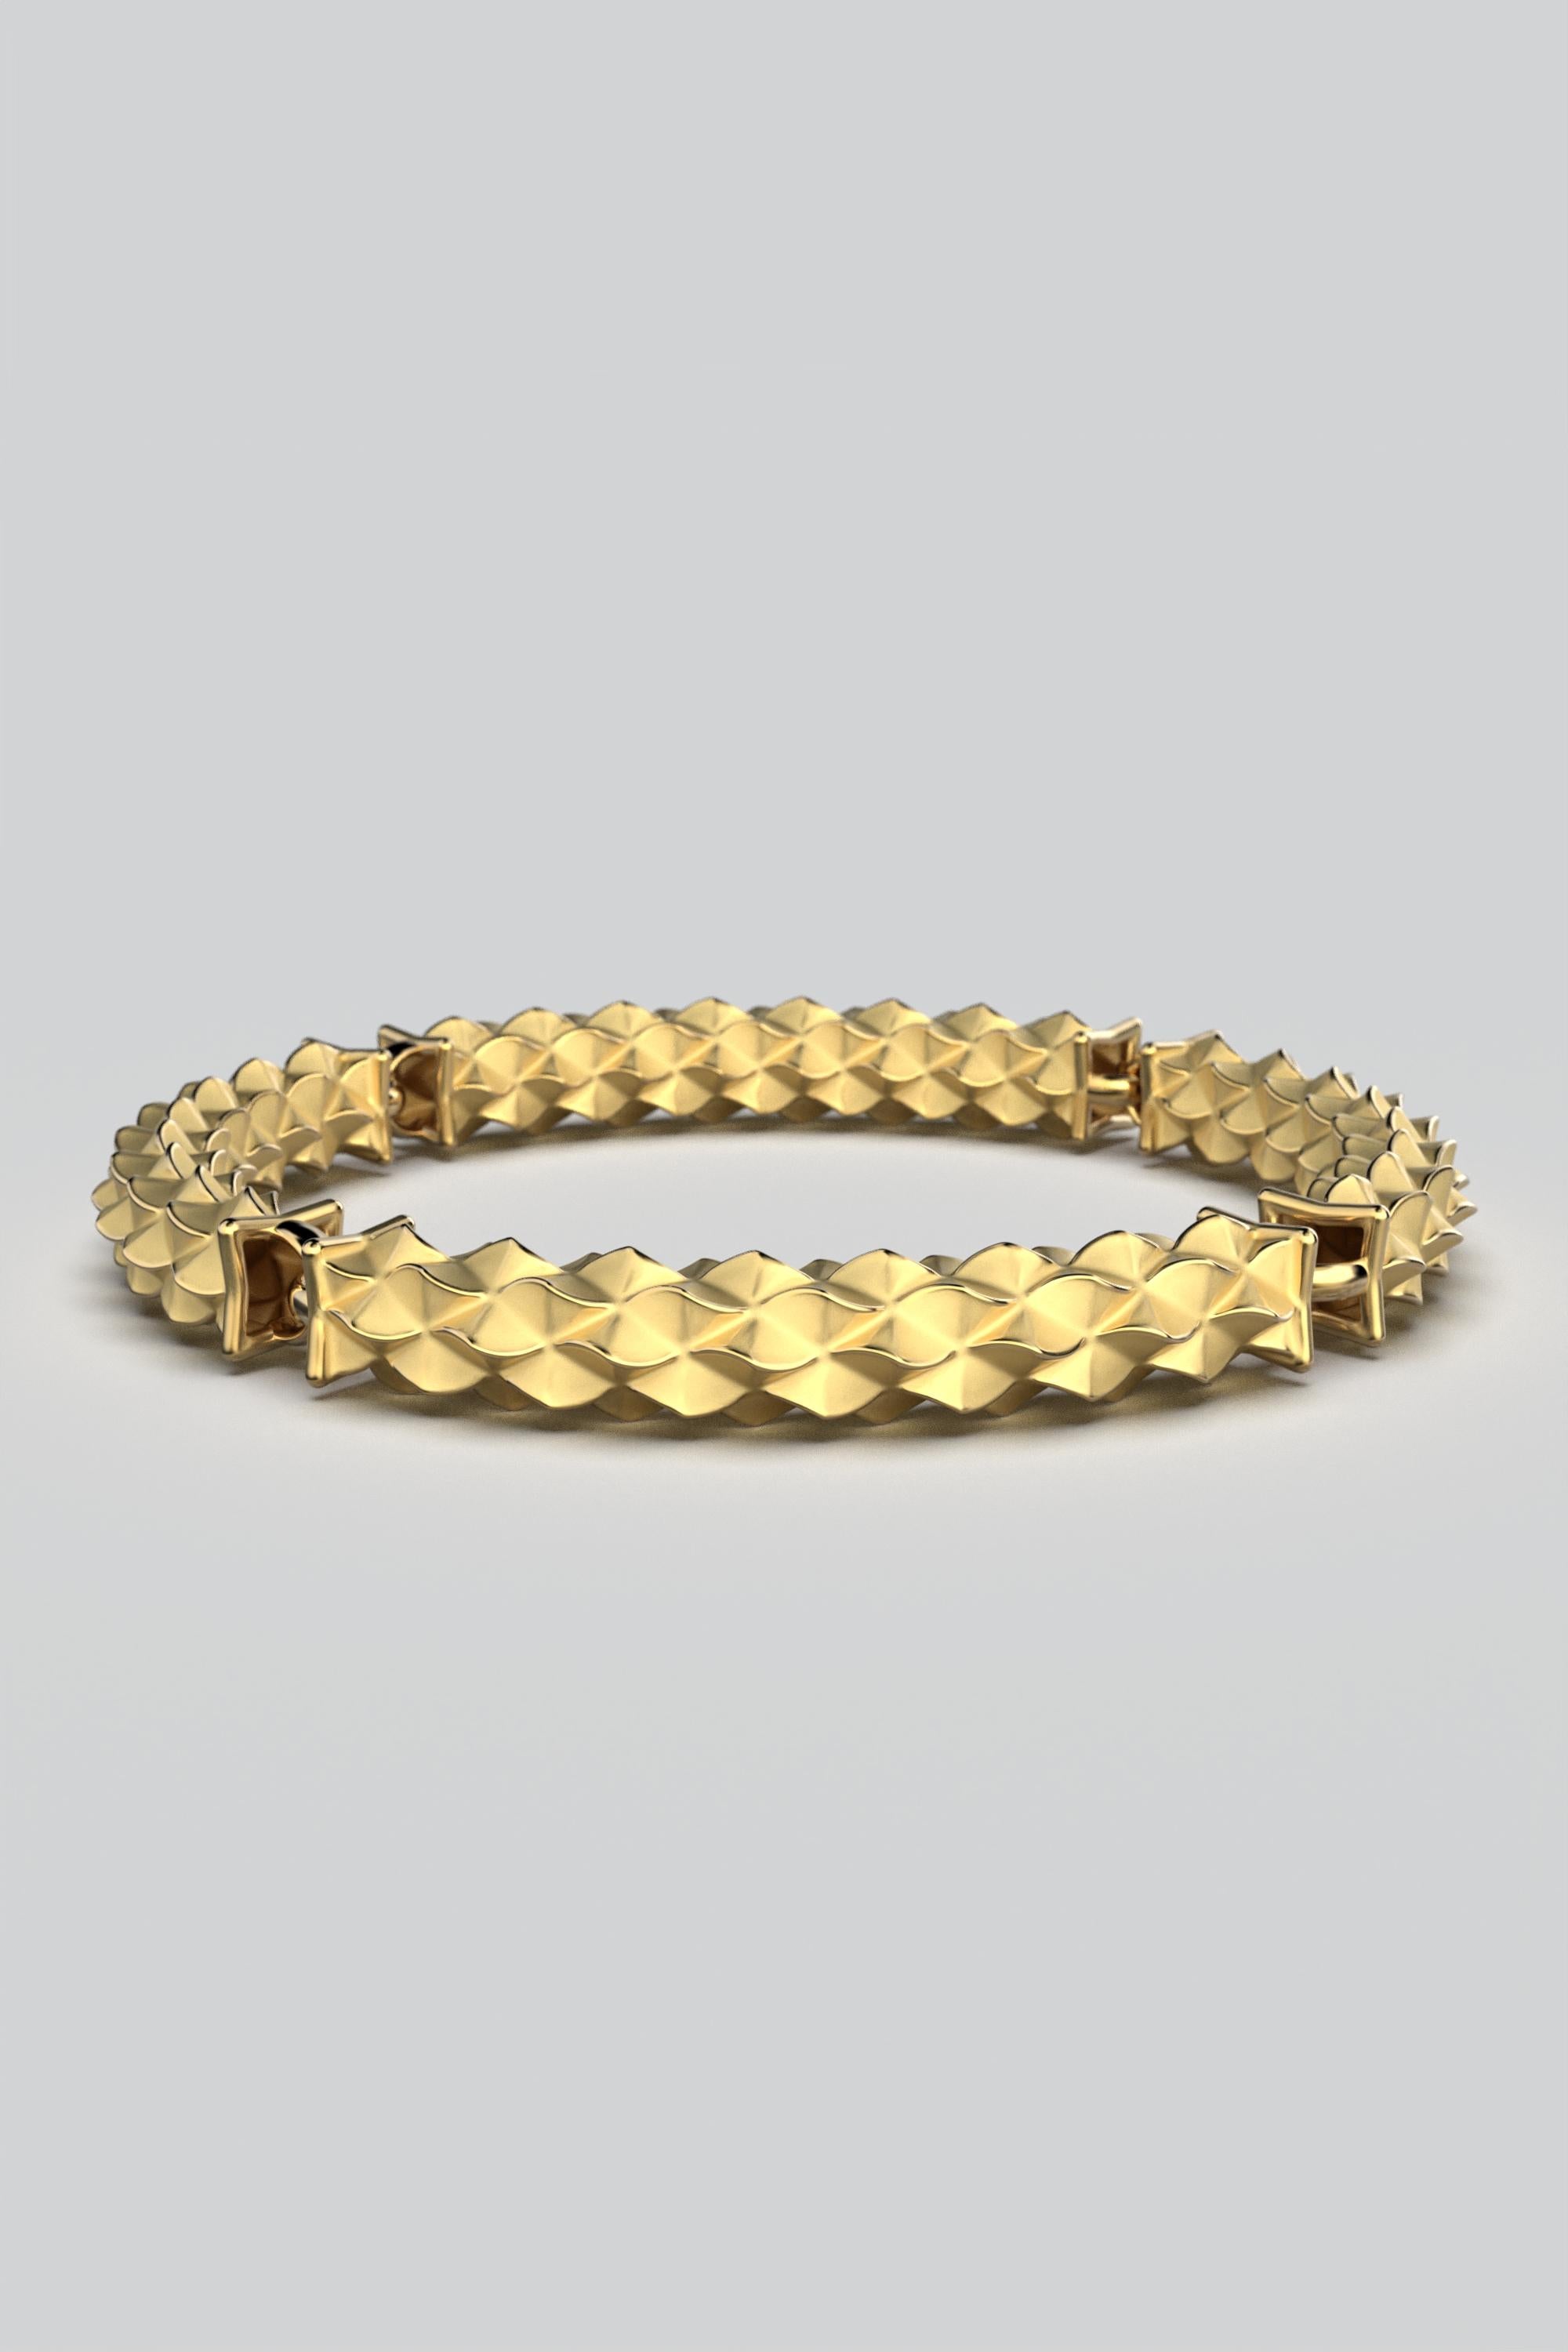 18k Italian Gold Bracelet: Custom Semi-Rigid Design by Oltremare Gioielli For Sale 3